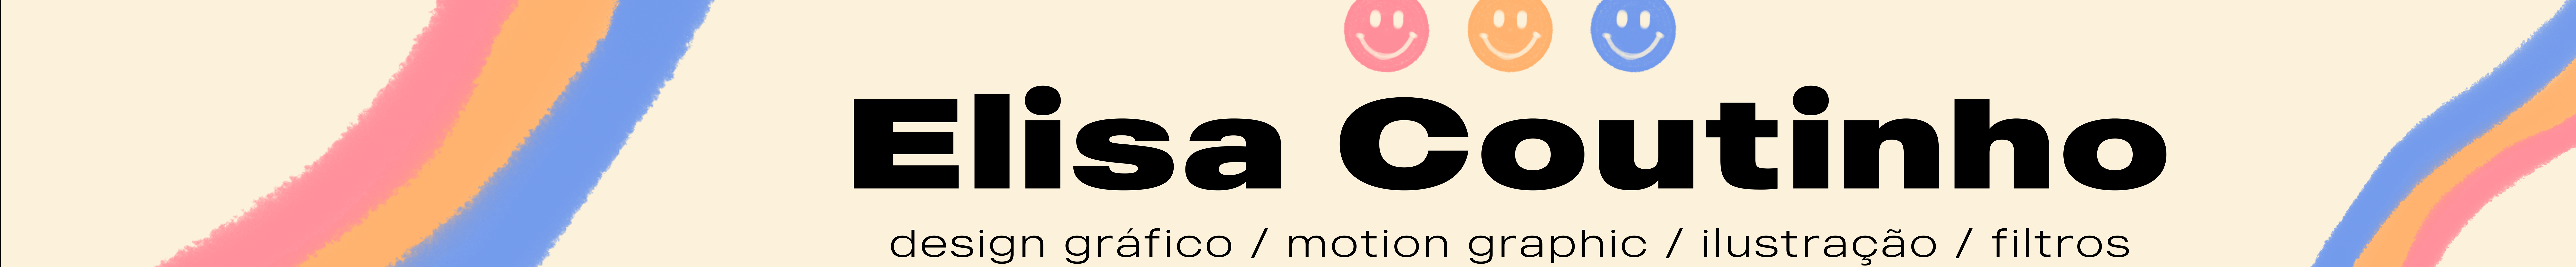 Banner de perfil de Elisa Coutinho